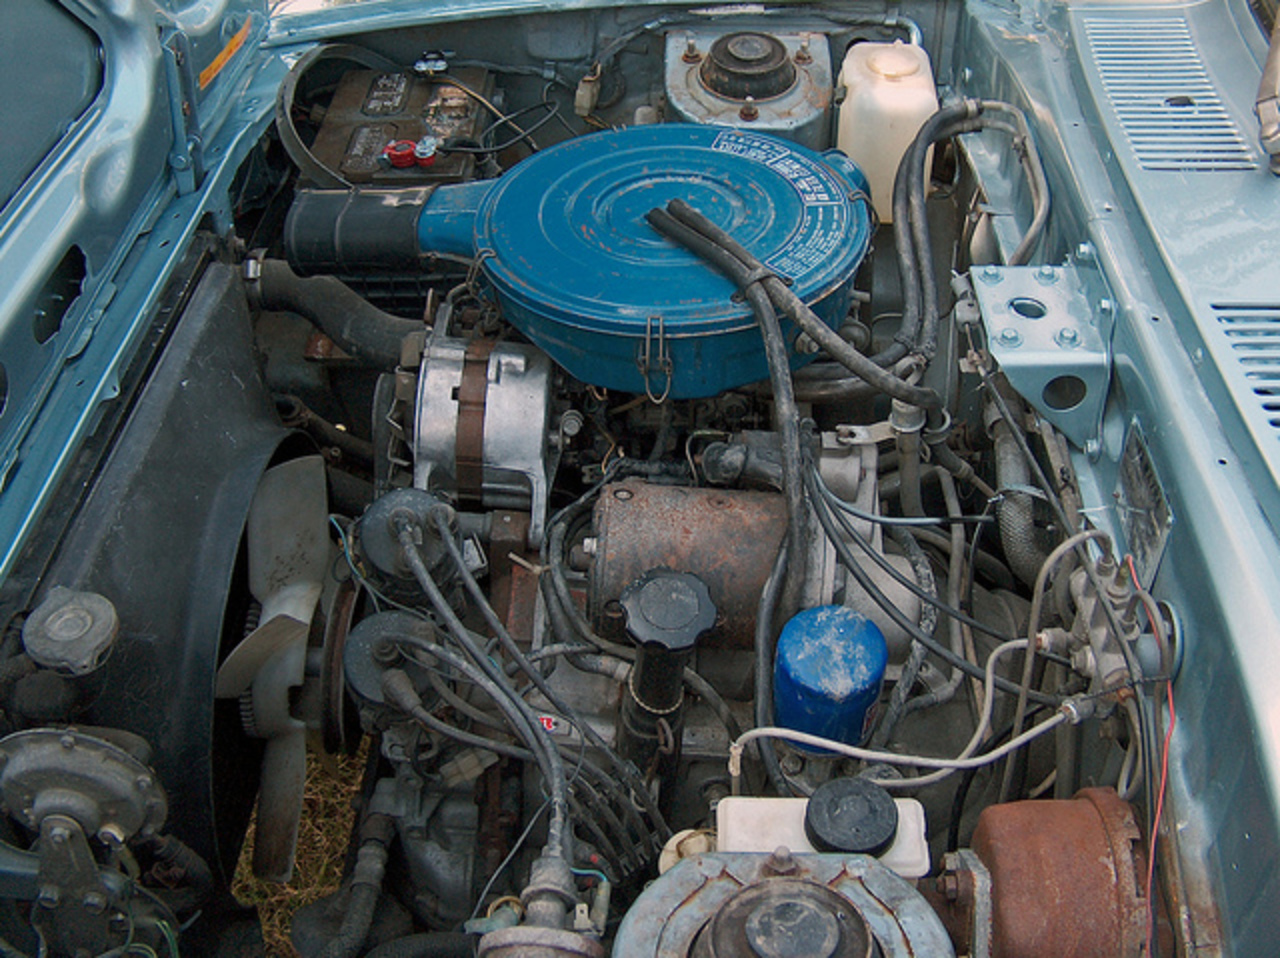 1973 Mazda RX-3 Wagon 12A engine | Flickr - Photo Sharing!